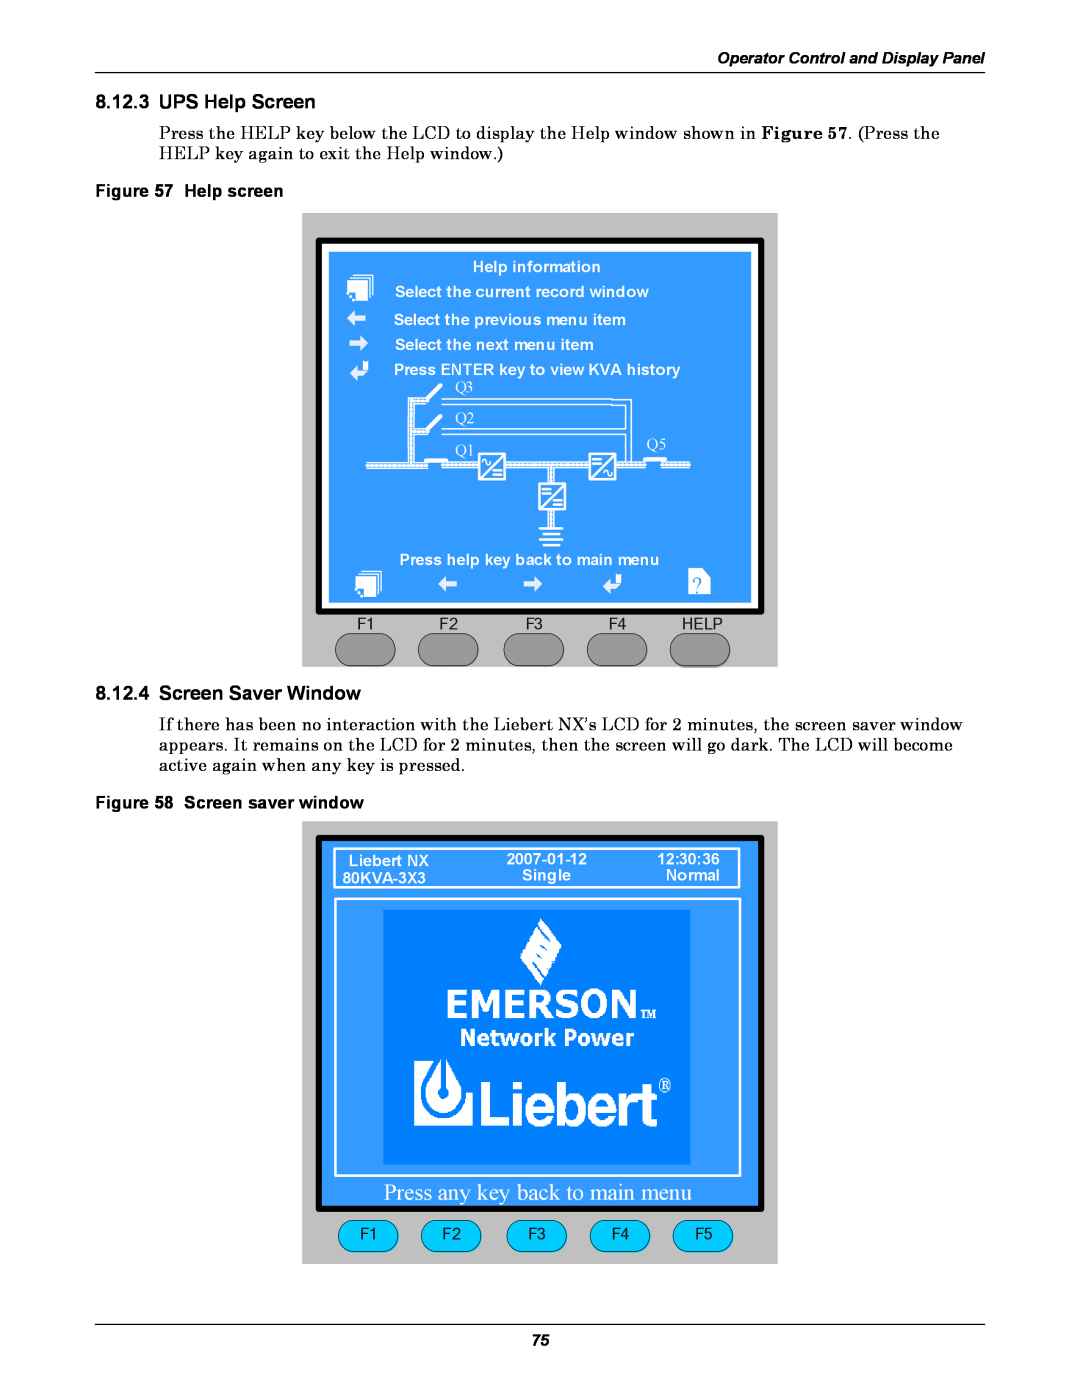 Emerson 480V, 60HZ Press any key back to main menu, 8.12.3UPS Help Screen, 8.12.4Screen Saver Window, Help screen 